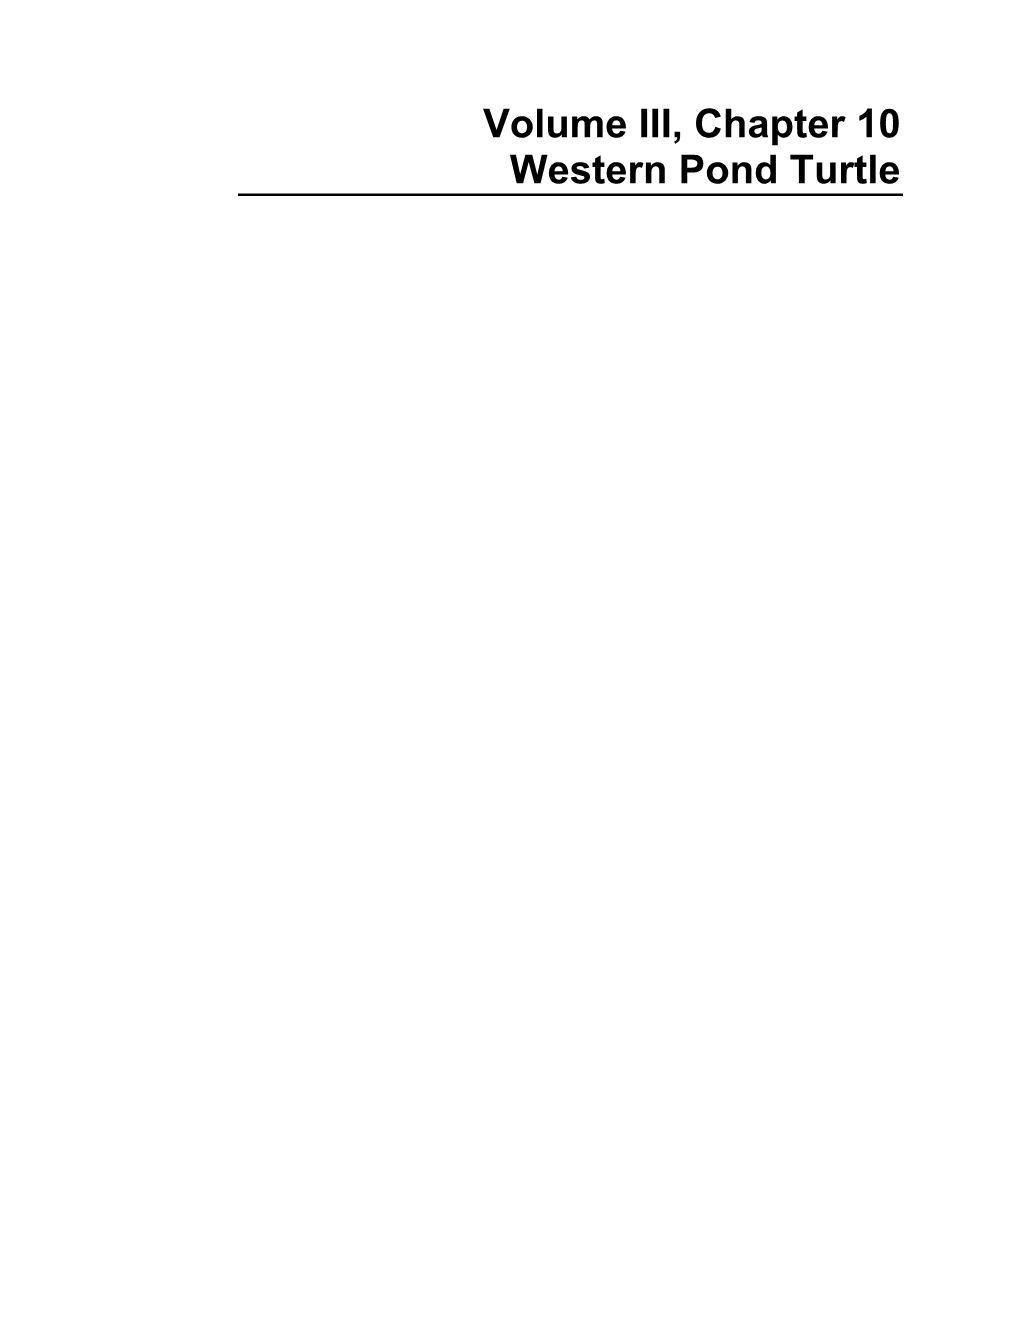 Volume III, Chapter 10 Western Pond Turtle